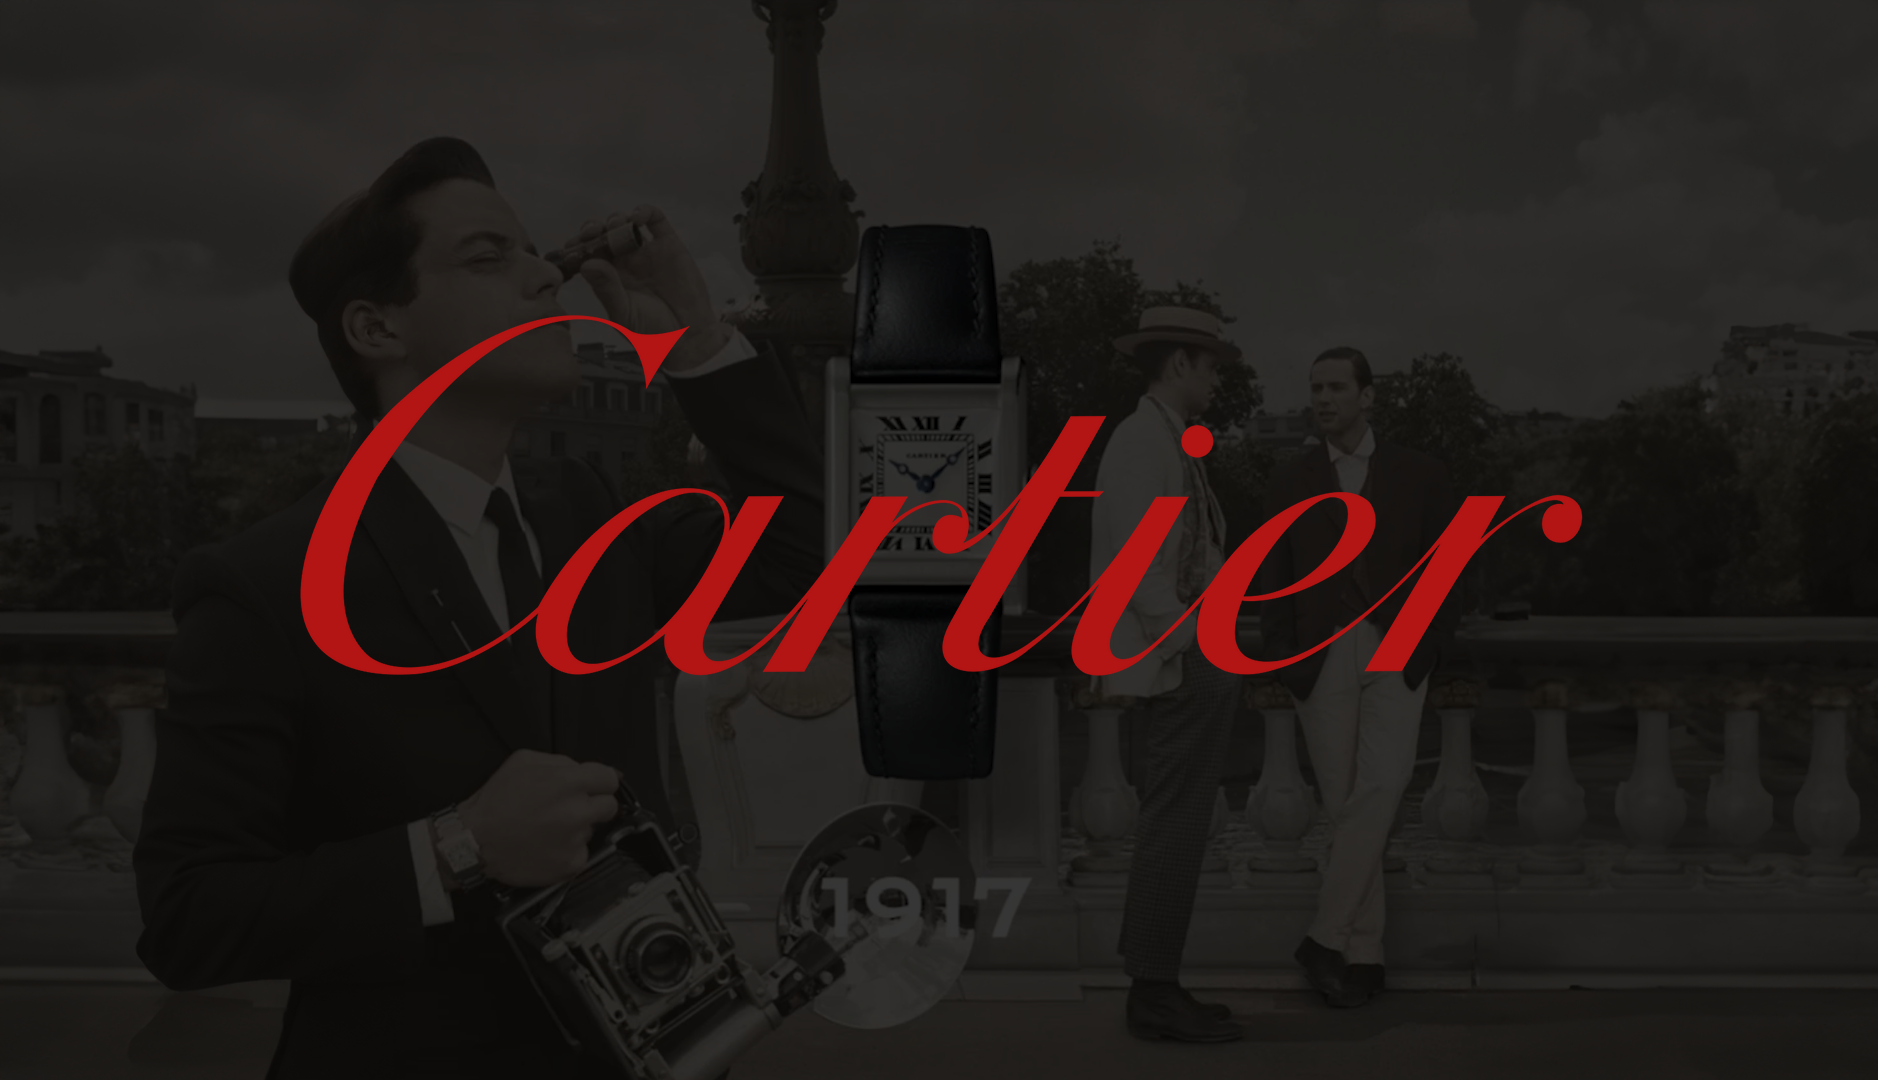 Cartier storytelling marketing